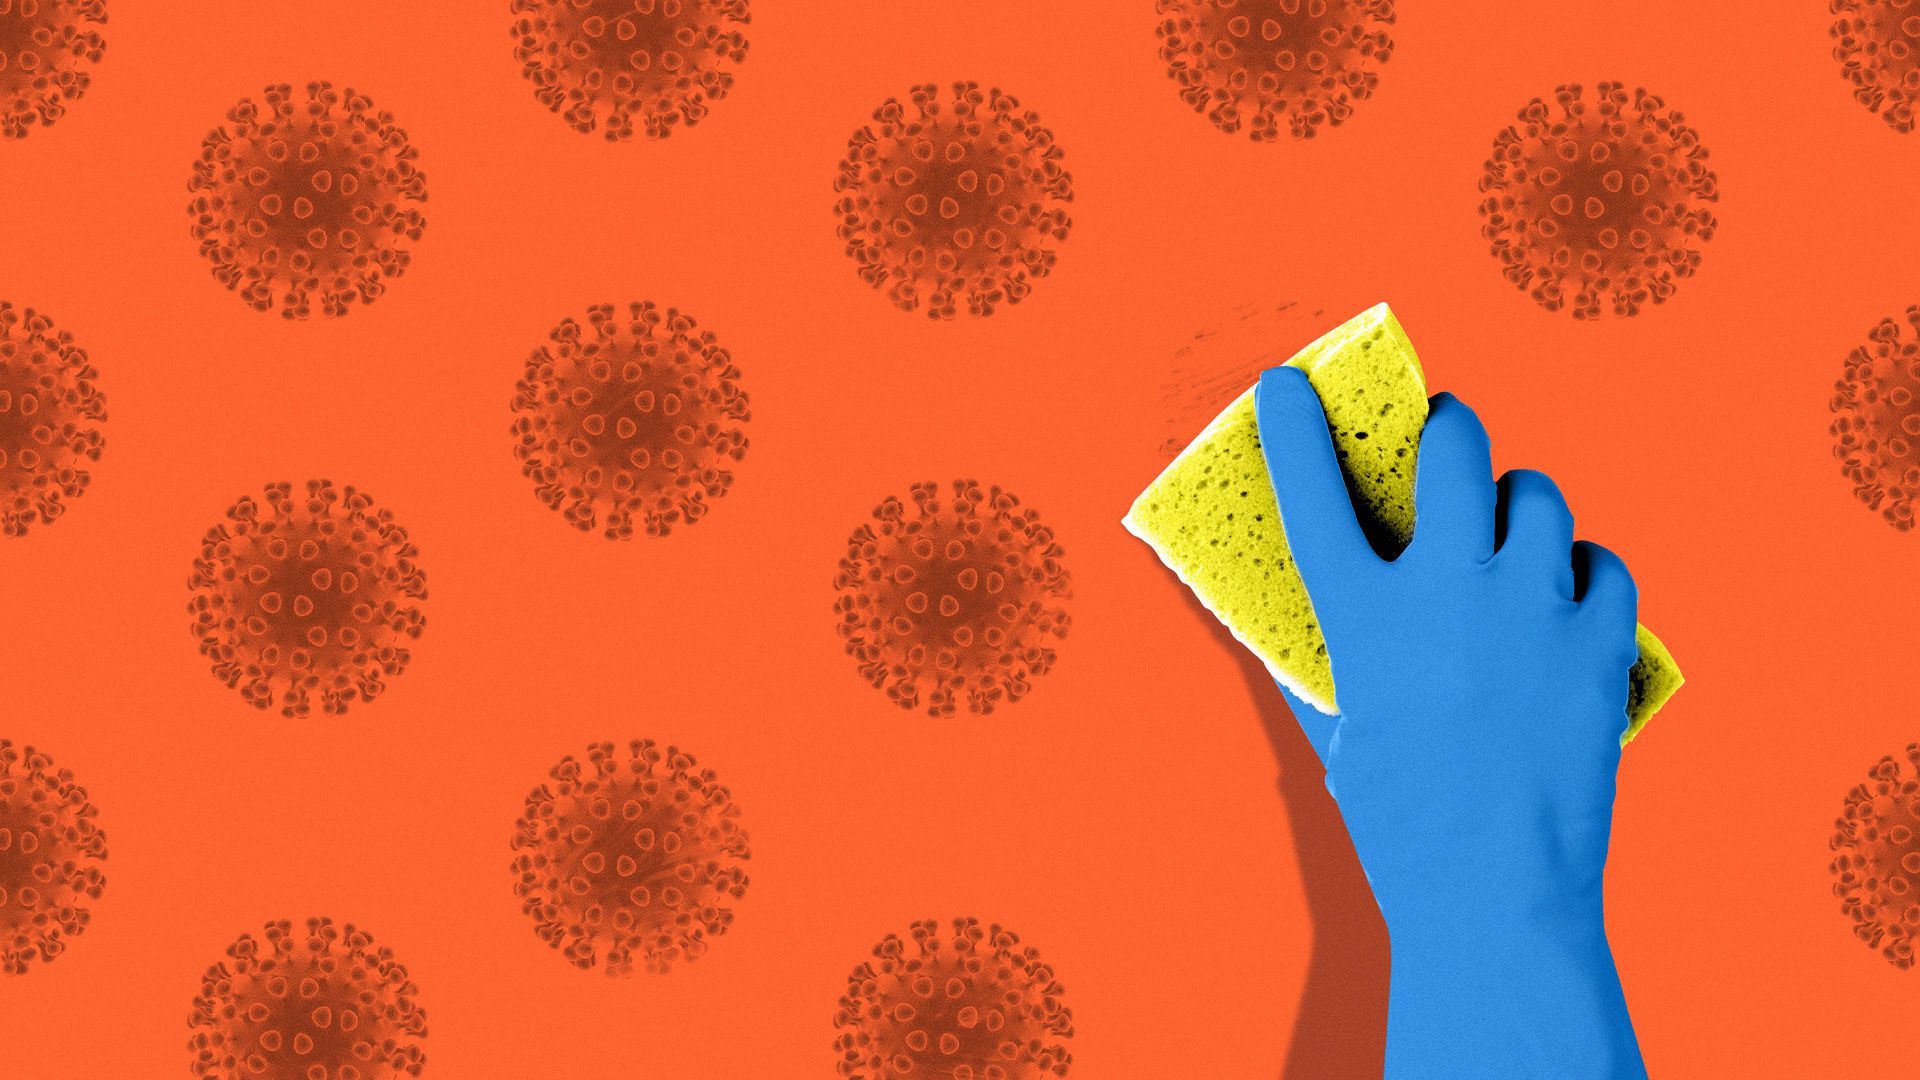 Illustration of gloved hand holding a sponge cleaning away viruses